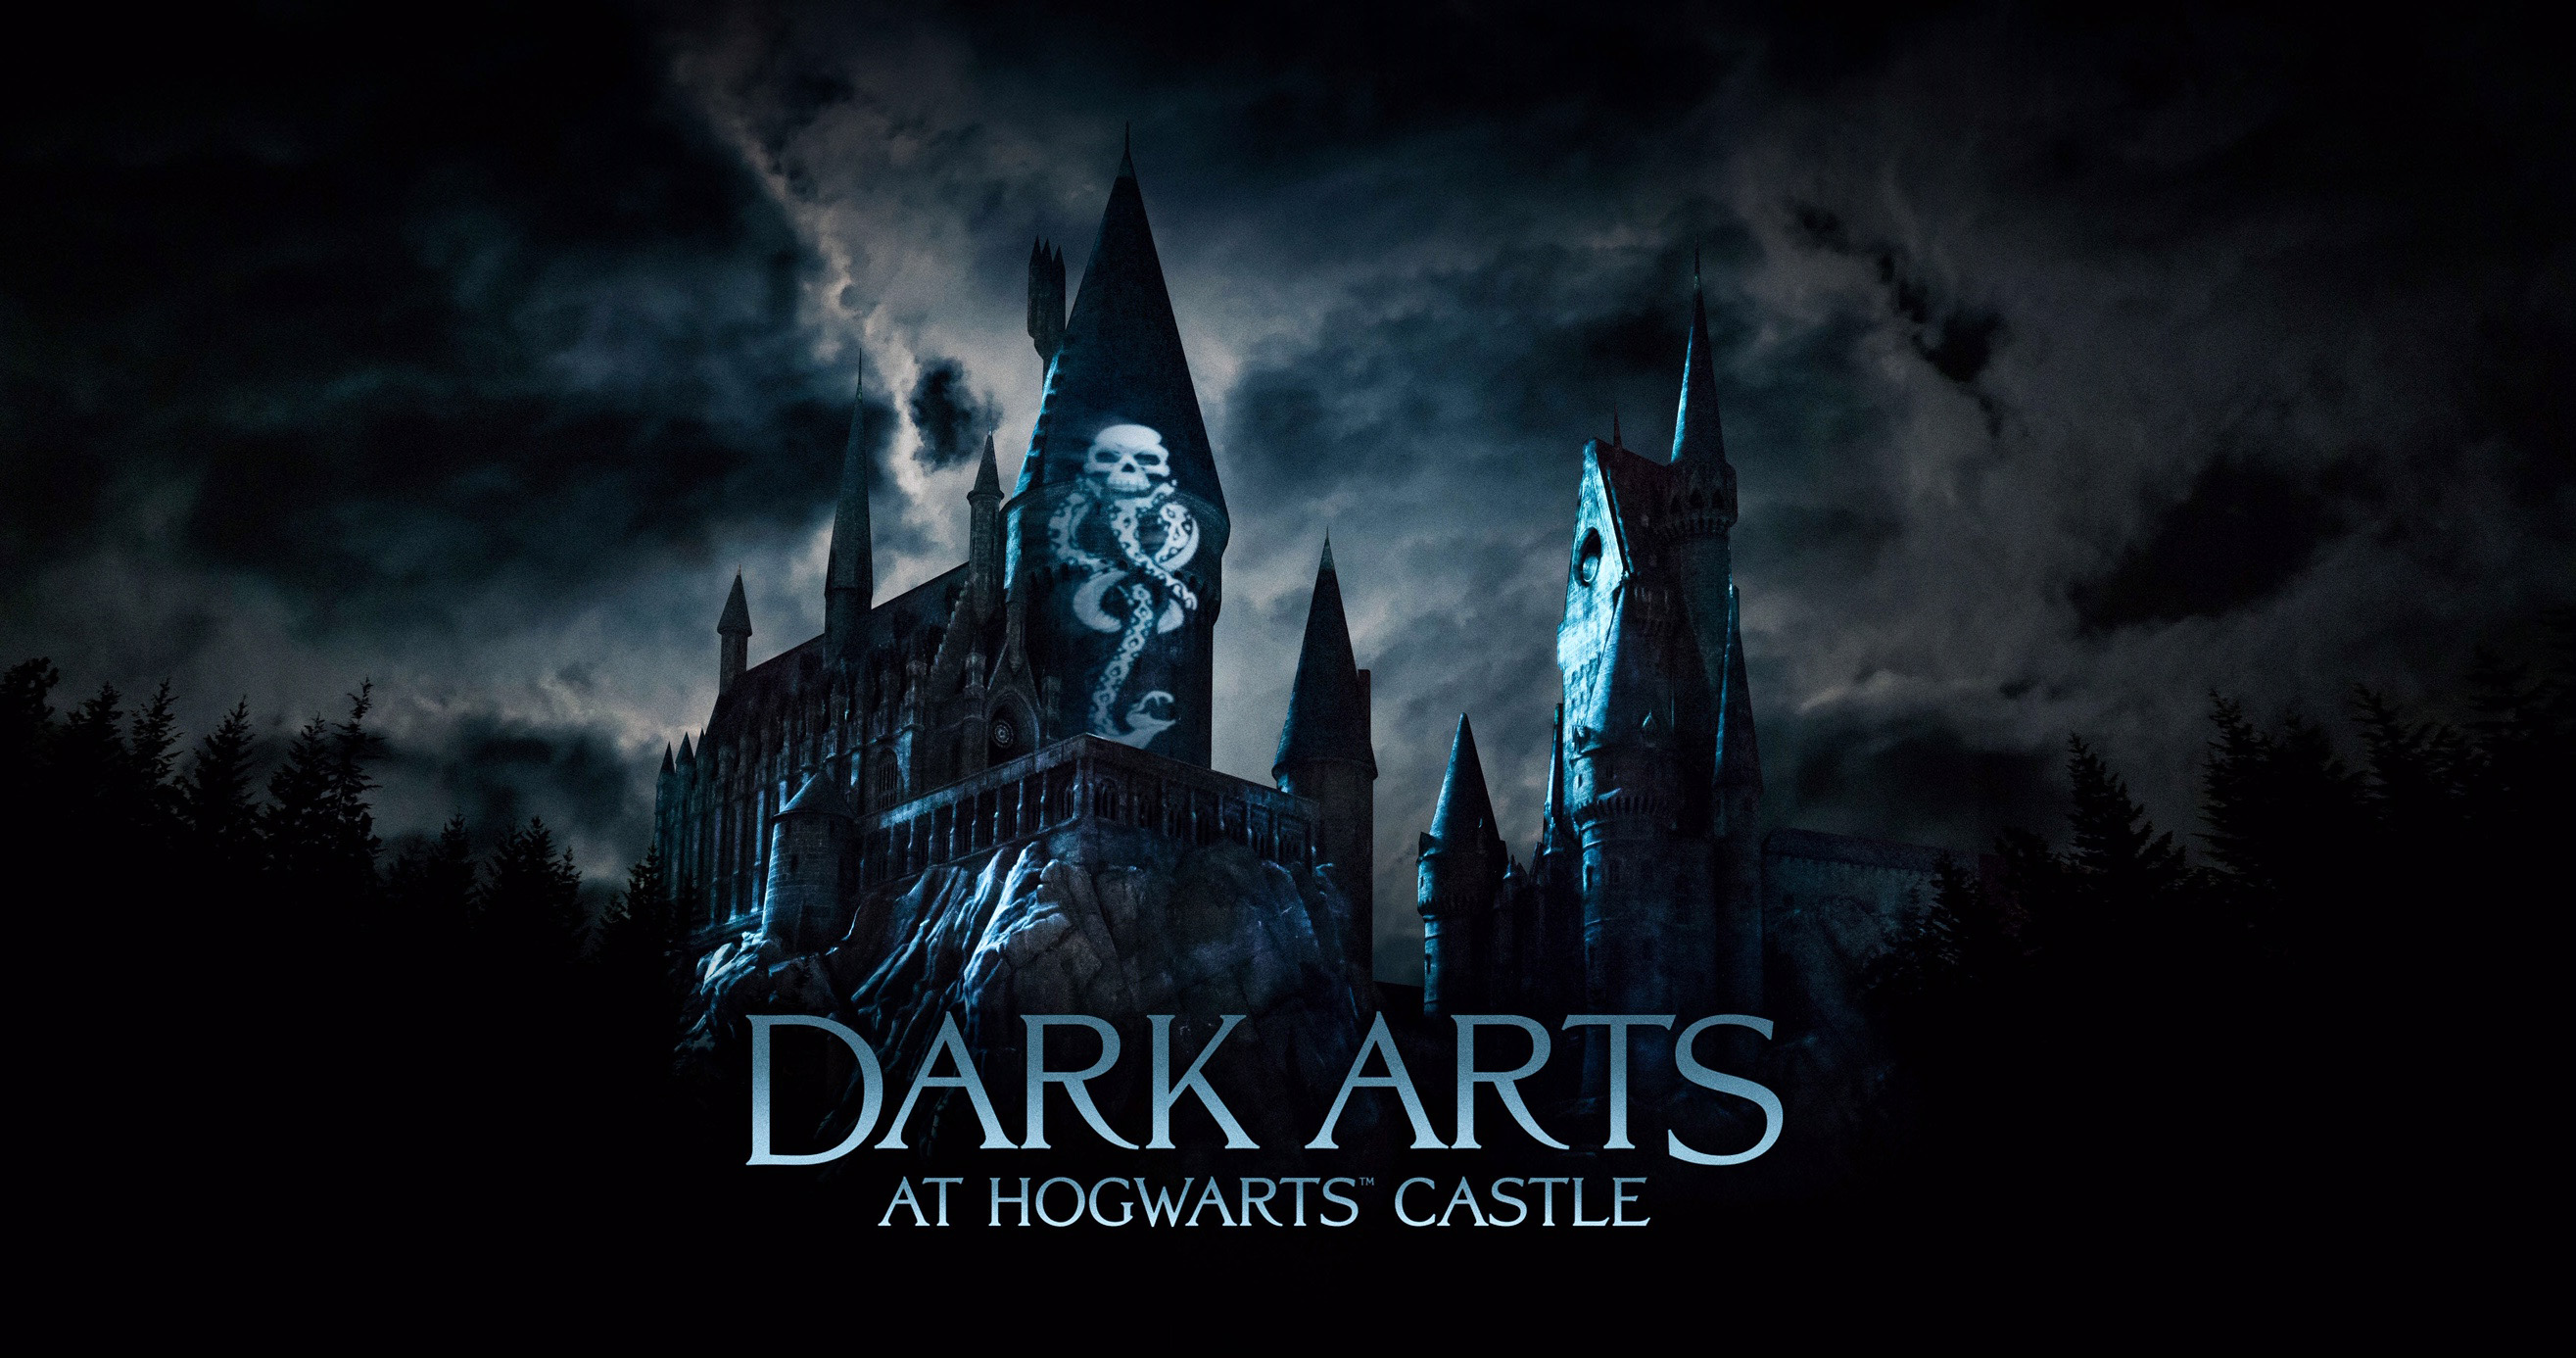 Universal Parks’ “Dark Arts at Hogwarts Castle” coming soon!